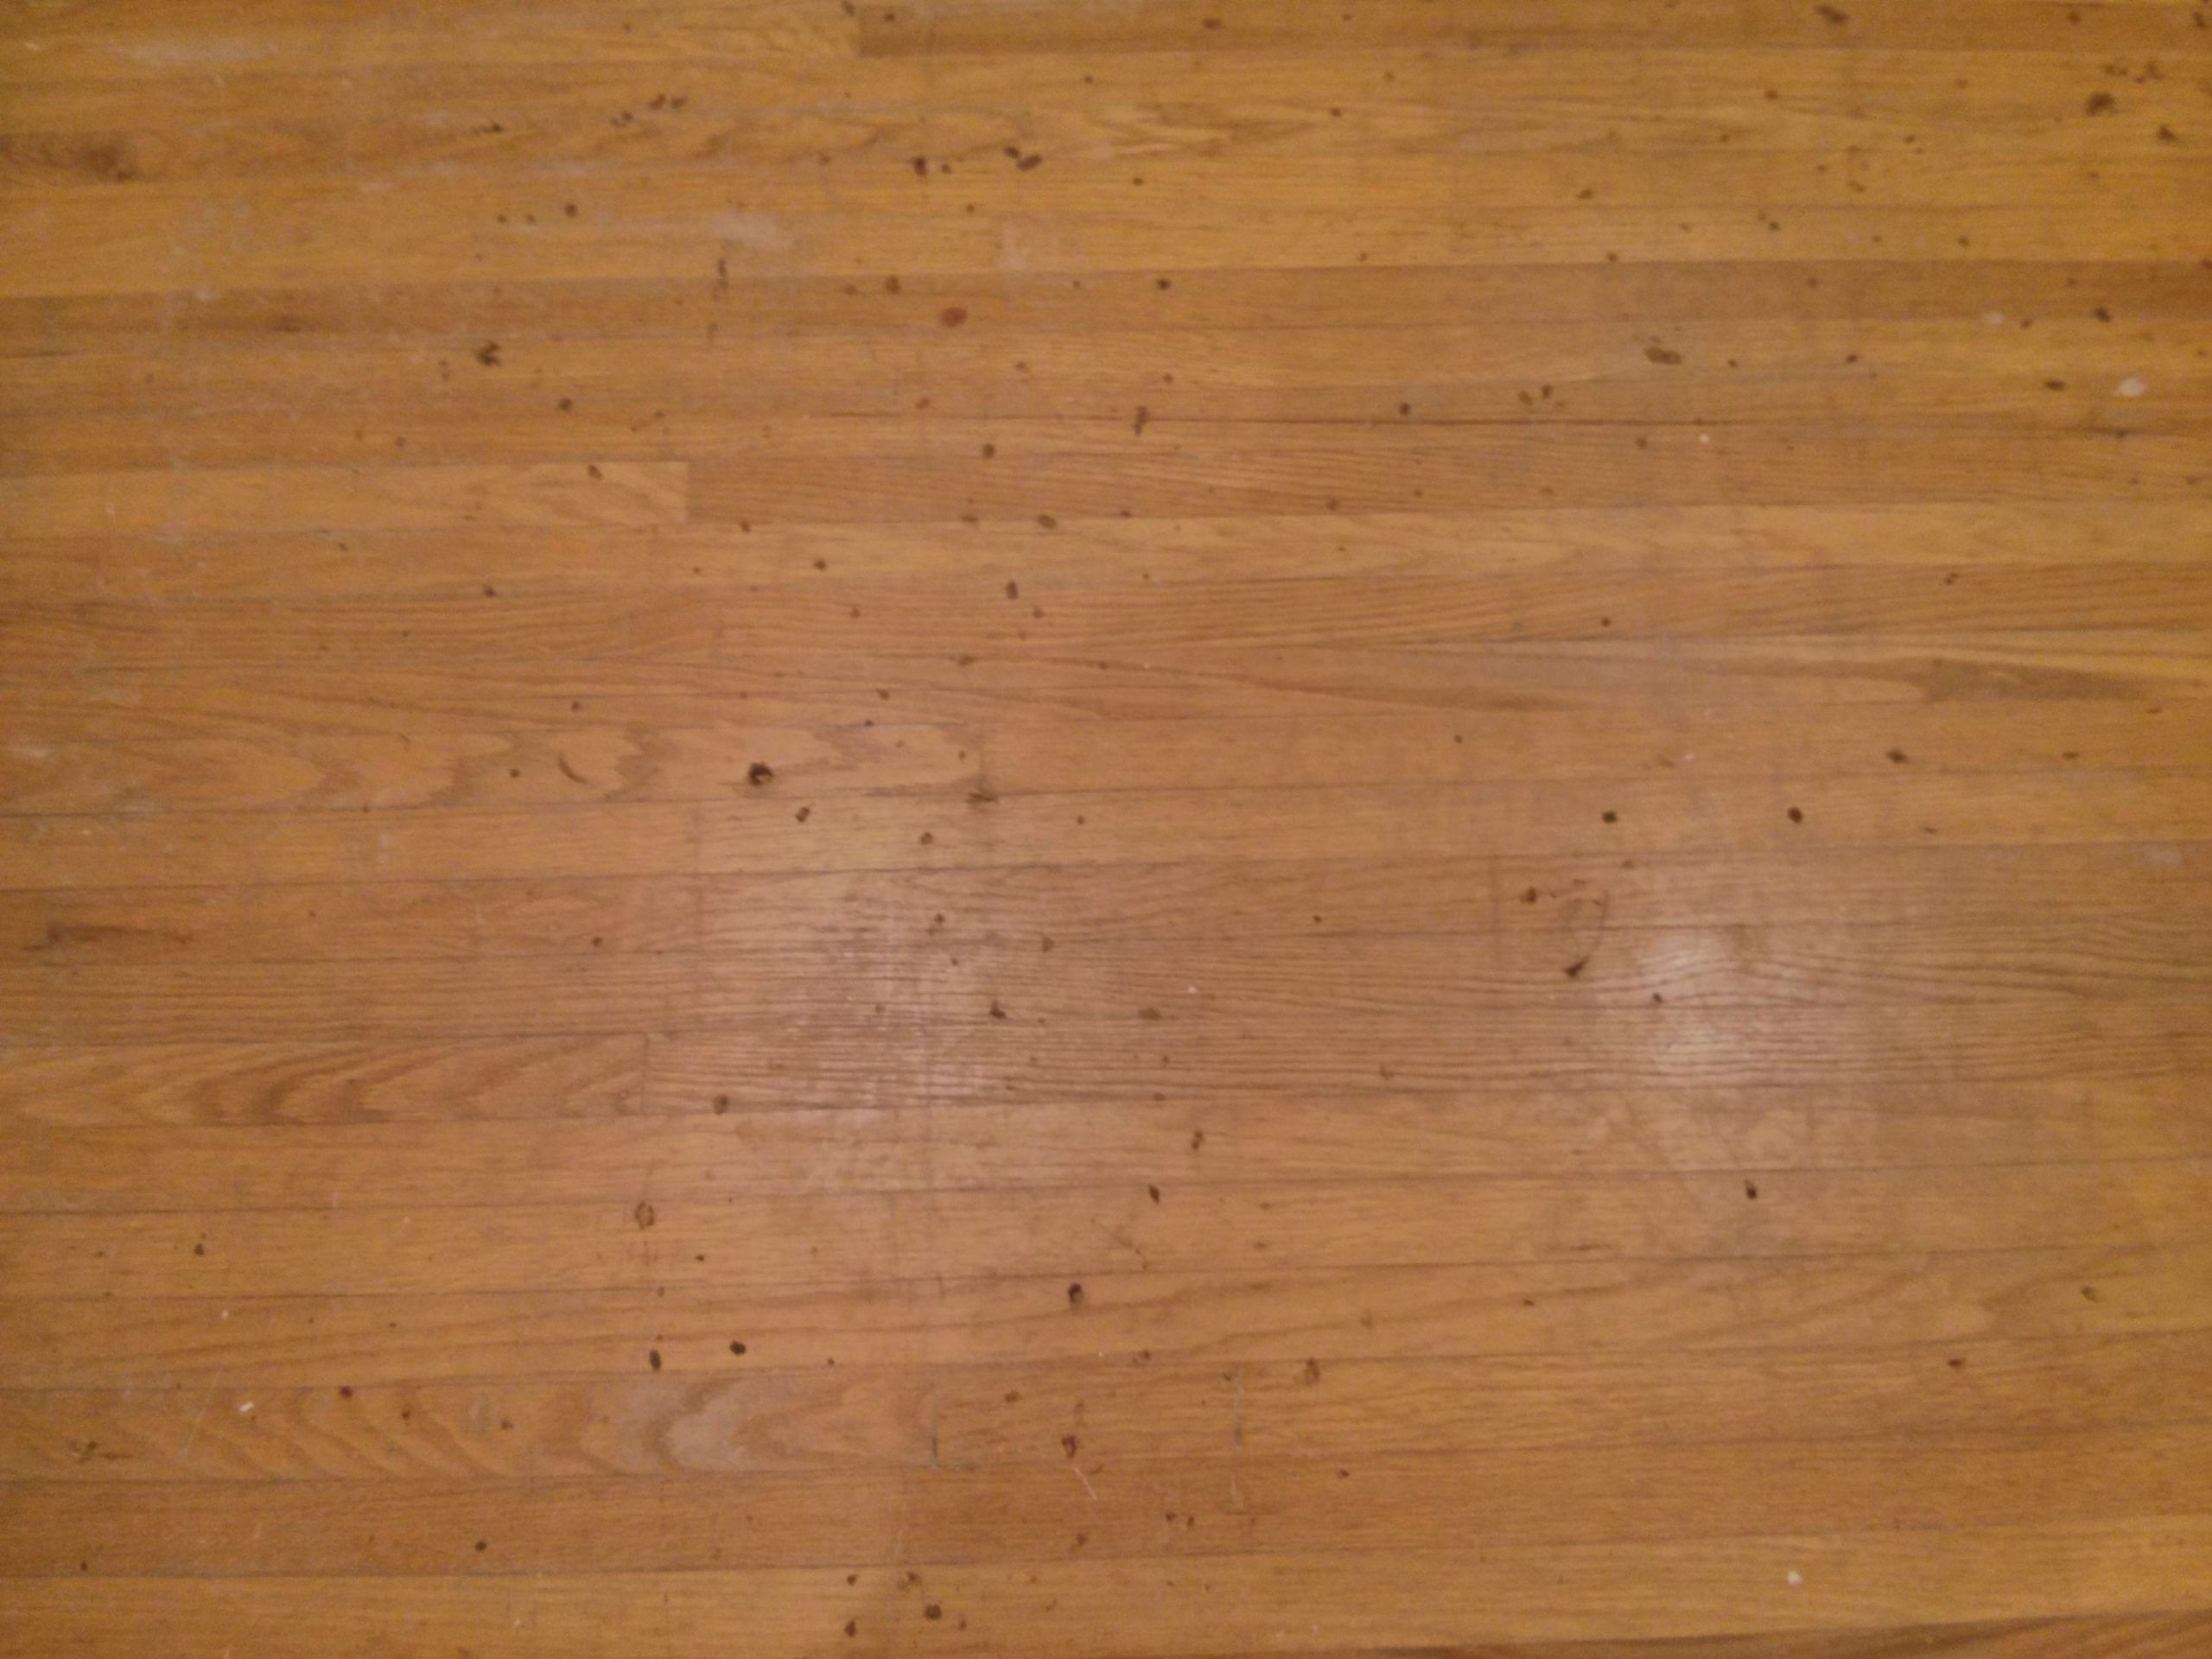 Refinishing Hardwood Floors Without Sanding DIY
 22 Amazing Do It Yourself Hardwood Floor Refinishing